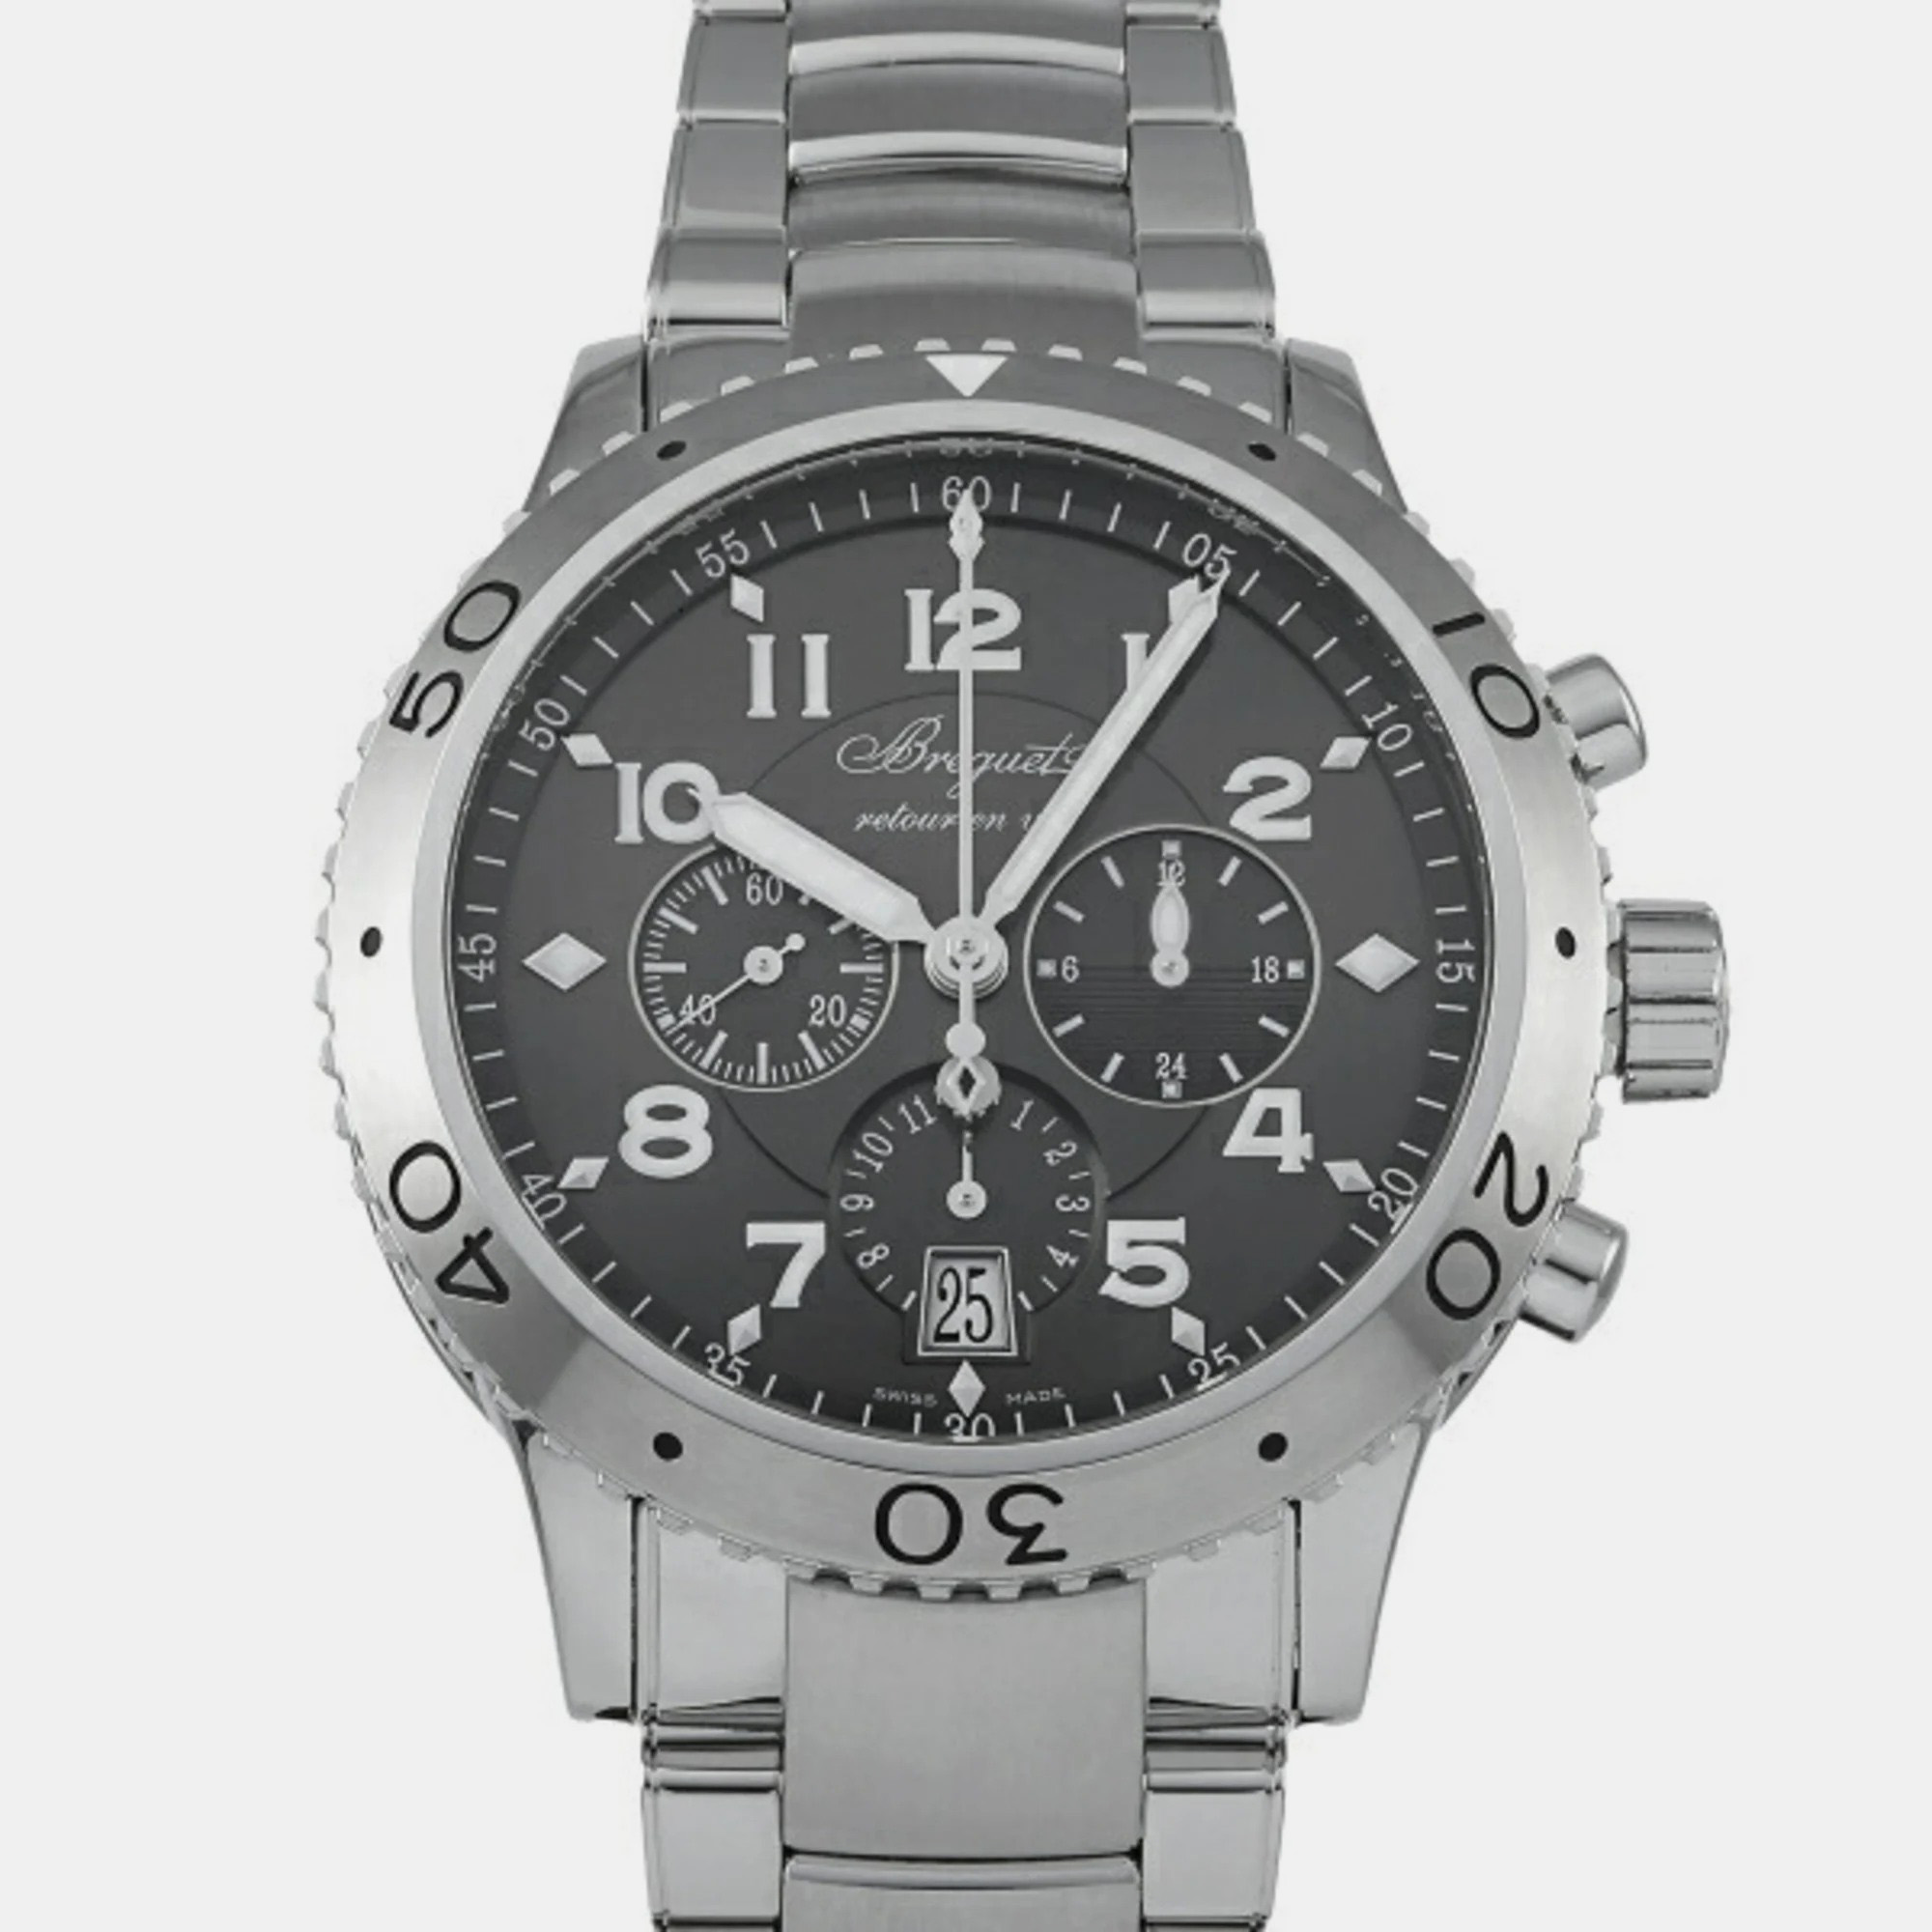 Breguet gray stainless steel transatlantic type xxi 3810st men's watch 42 mm